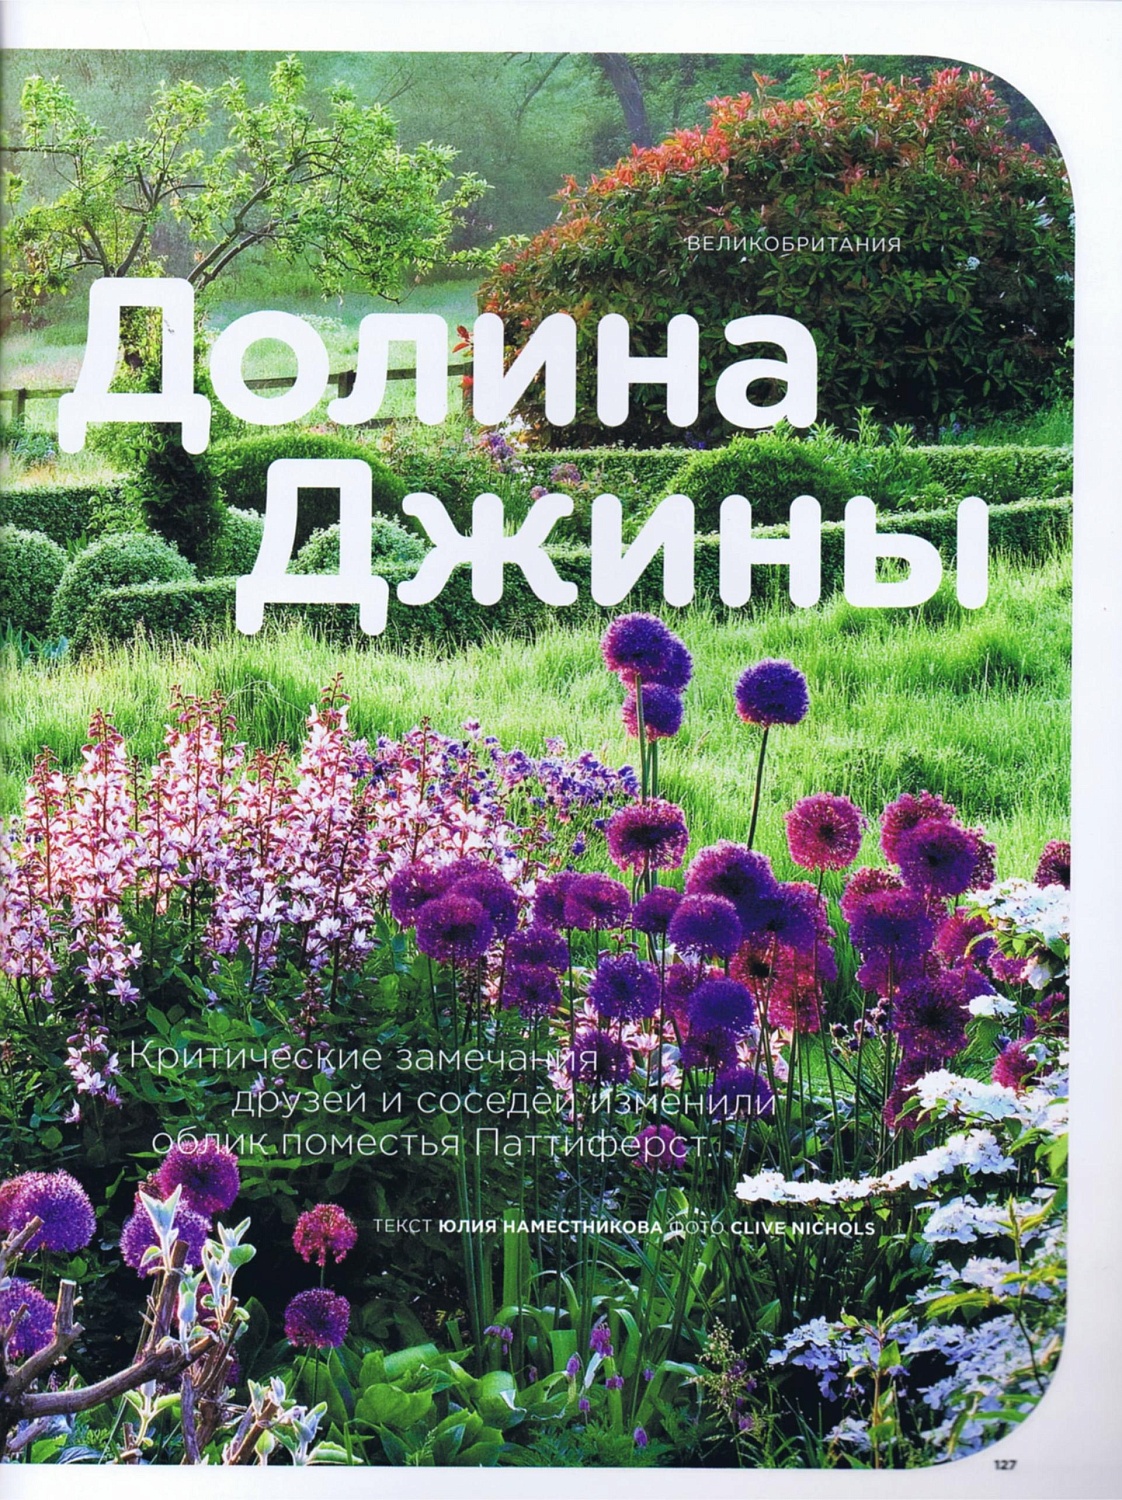 Журнал "ИНТЕРЬЕР+ДИЗАЙН" - "Долина Джины" 2010